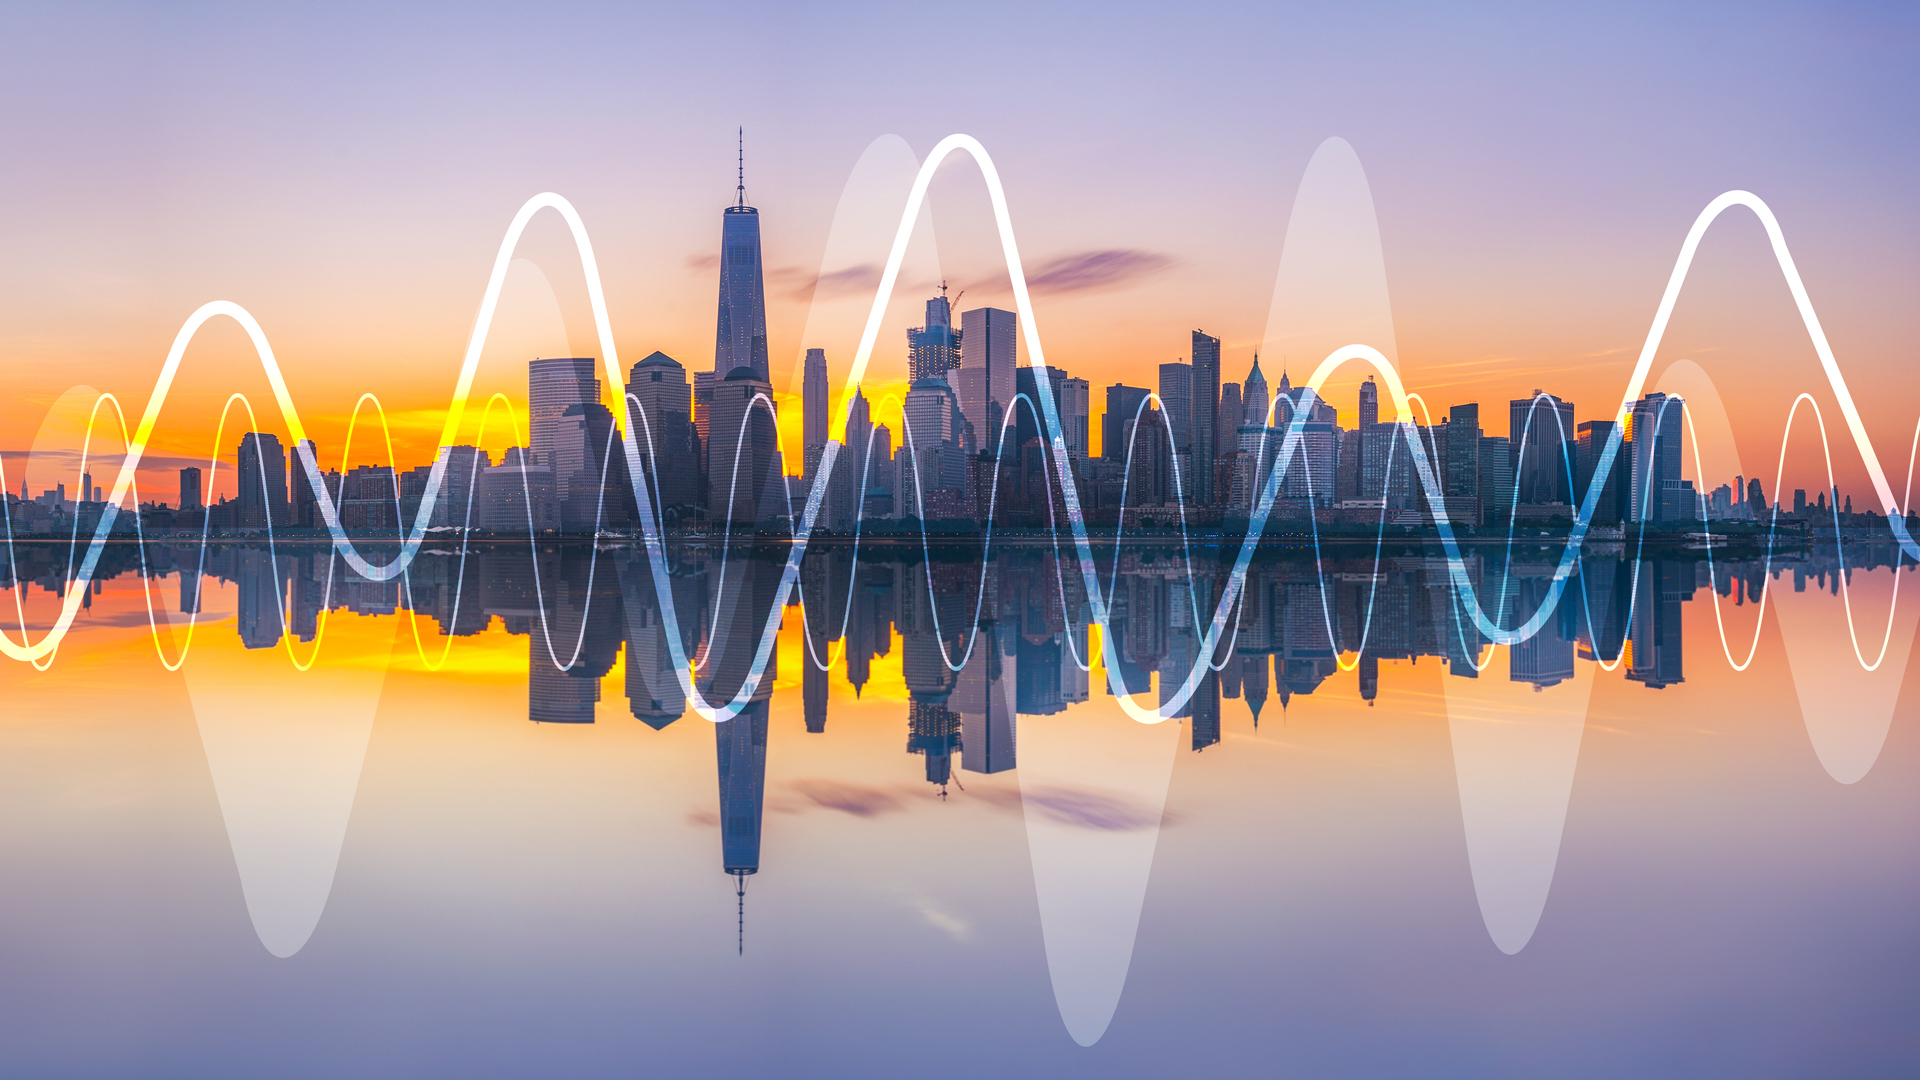 Illustration of soundwaves overlaid over a city